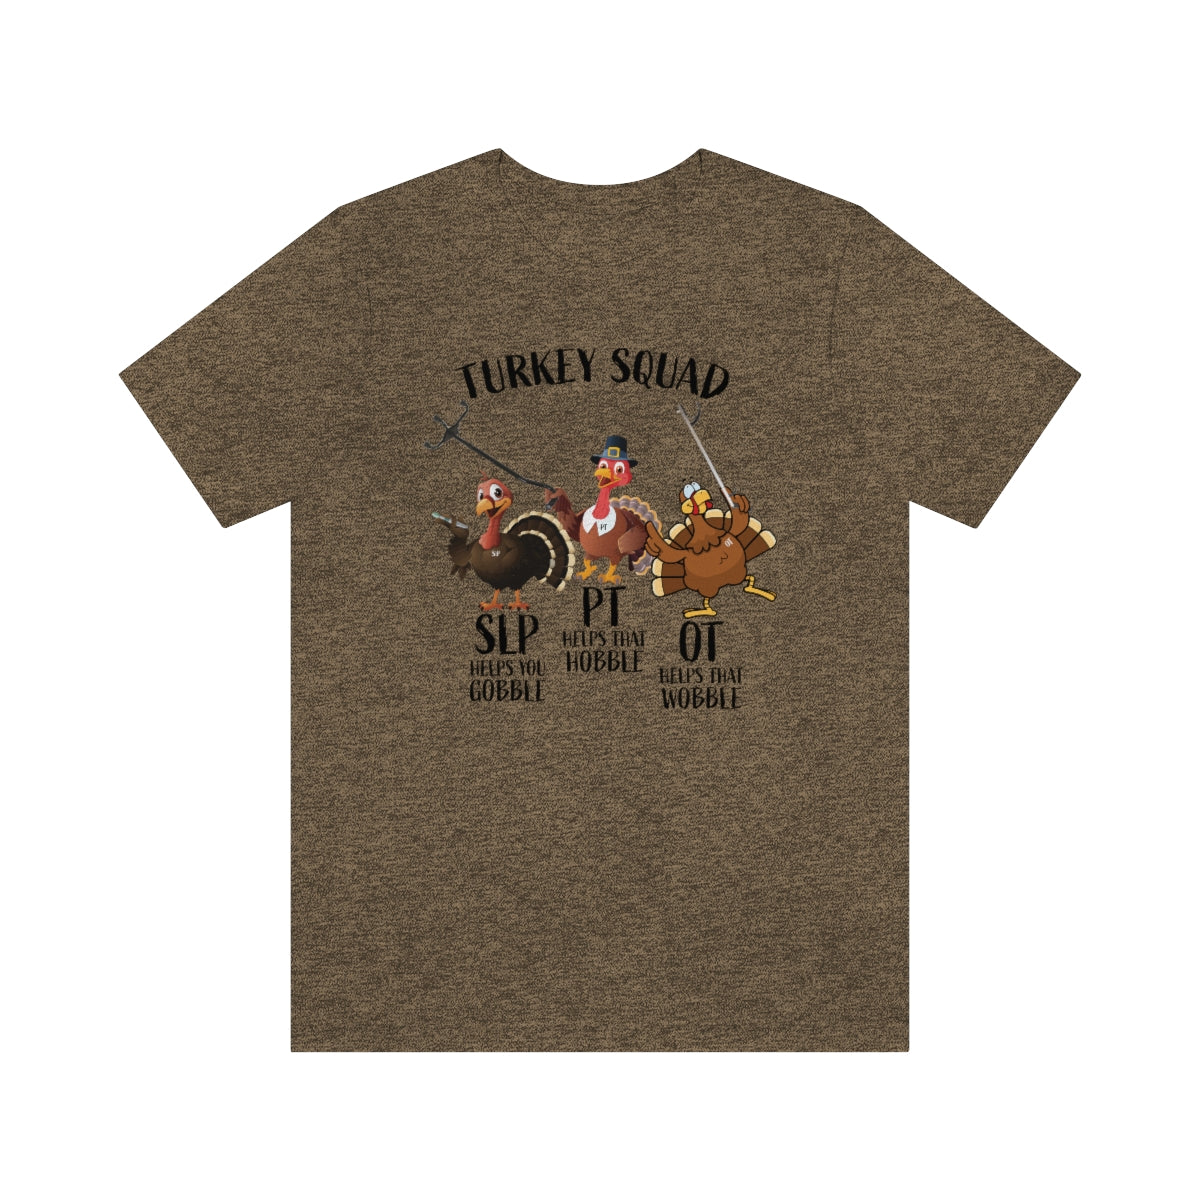 Turkey Squad, OT, PT and SLP Therapy Shirt Halloween Fall Unisex Shirt